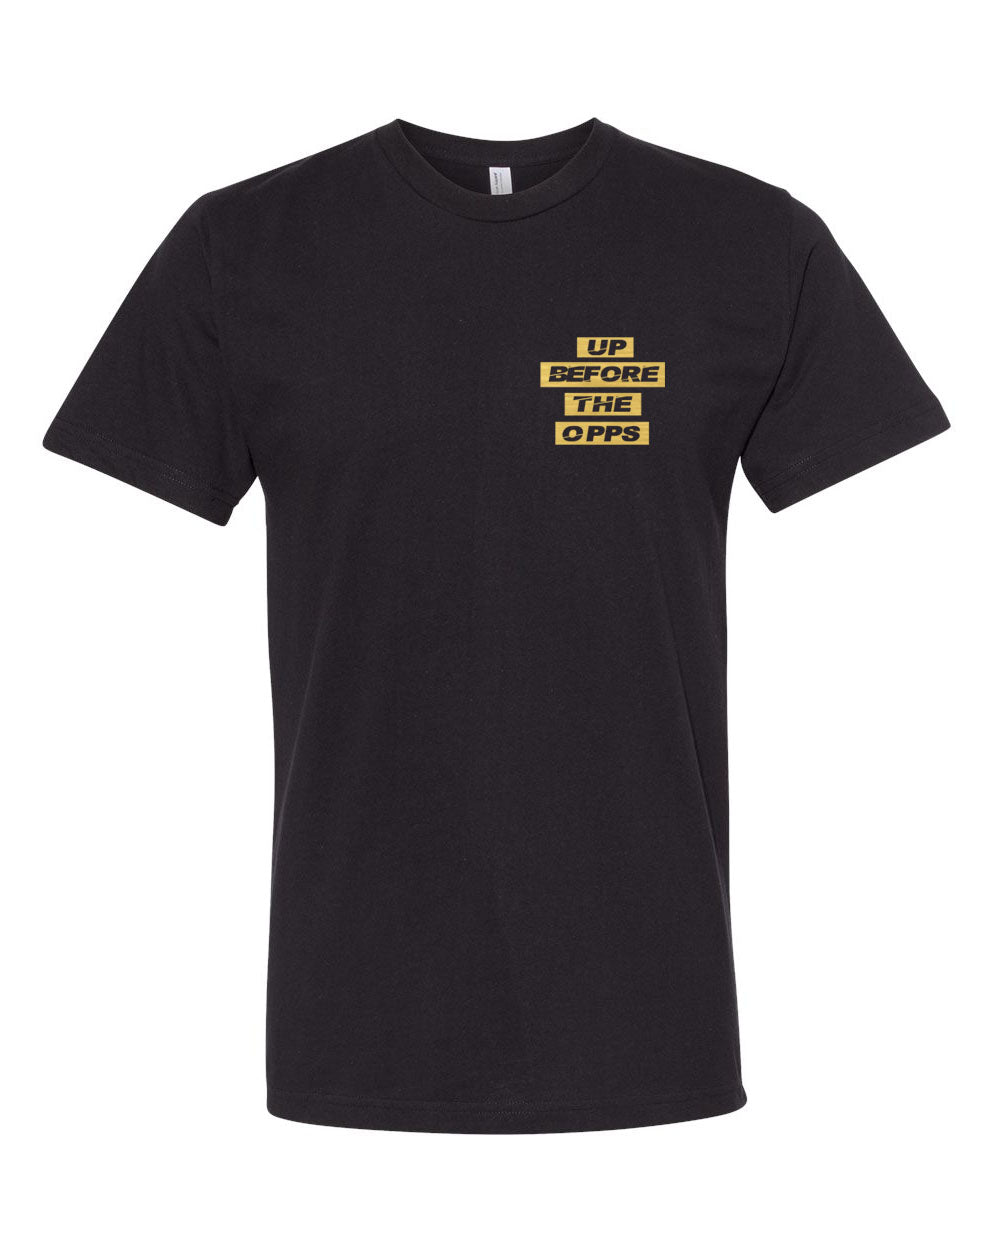 UBTO Black T-Shirt